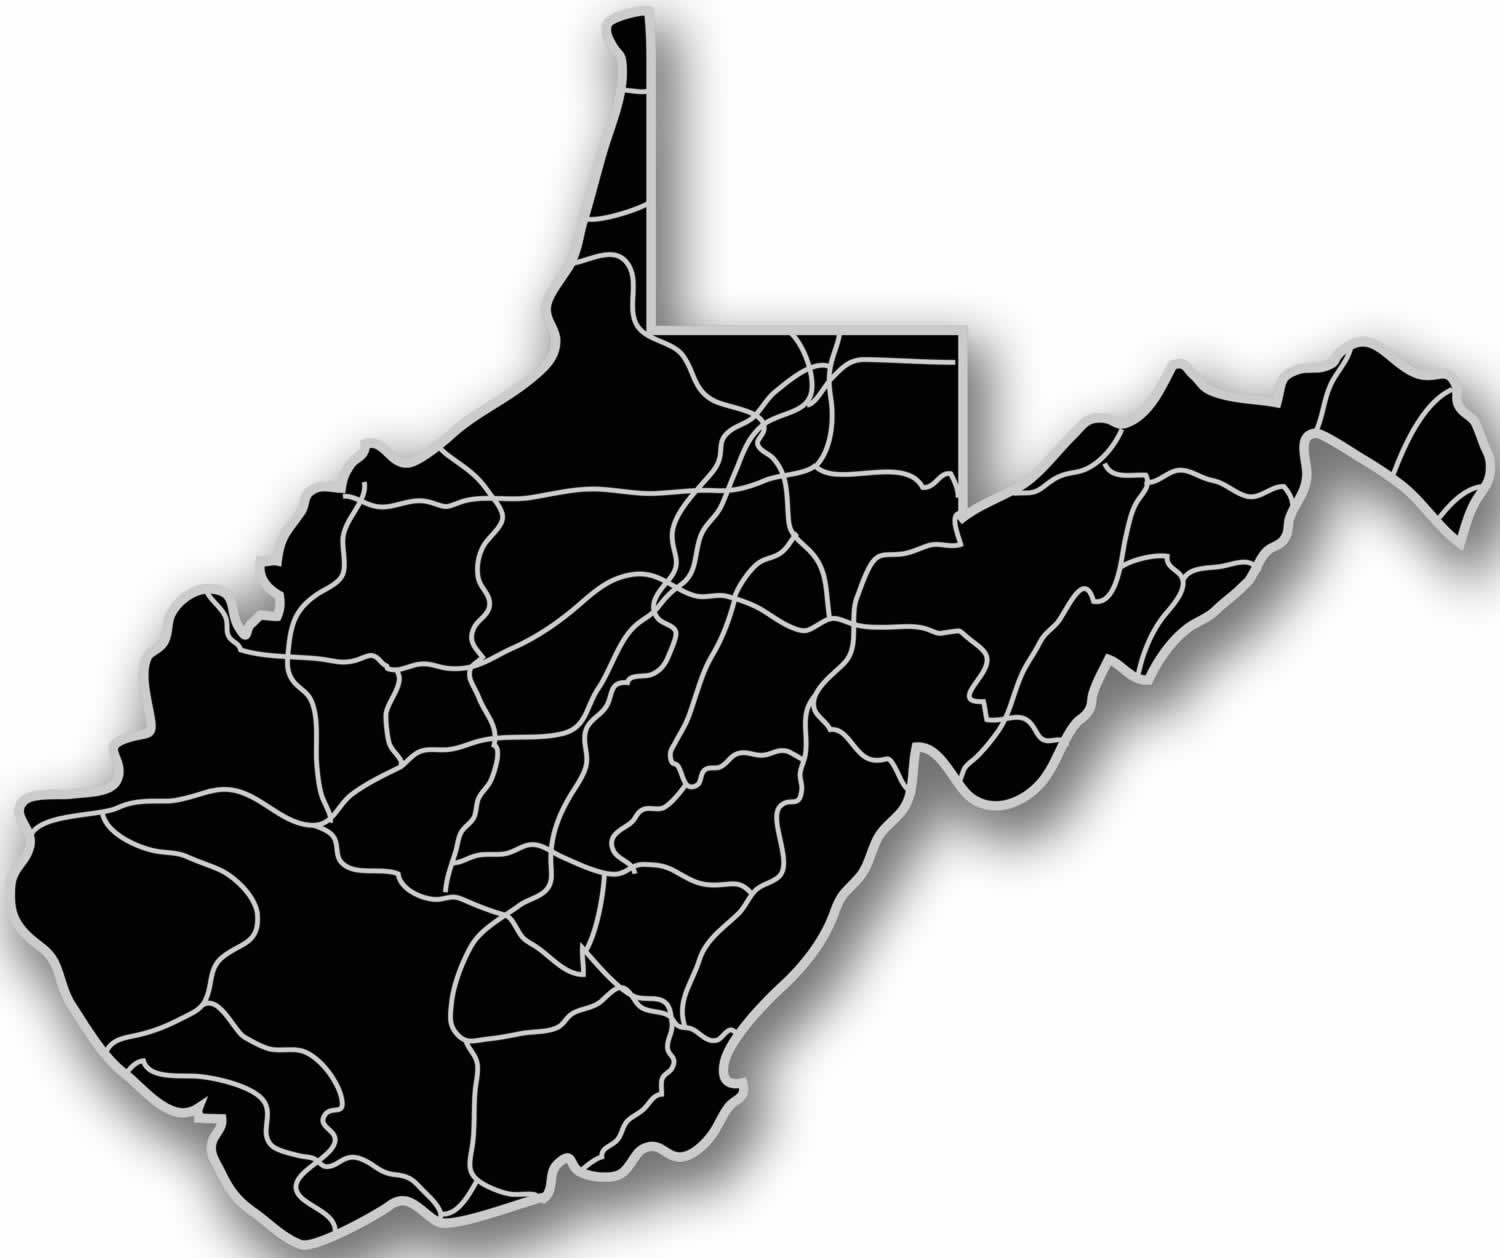 West Virginia - Acrylic Cutout State Map - Black/Grey USA States Acrylic Art